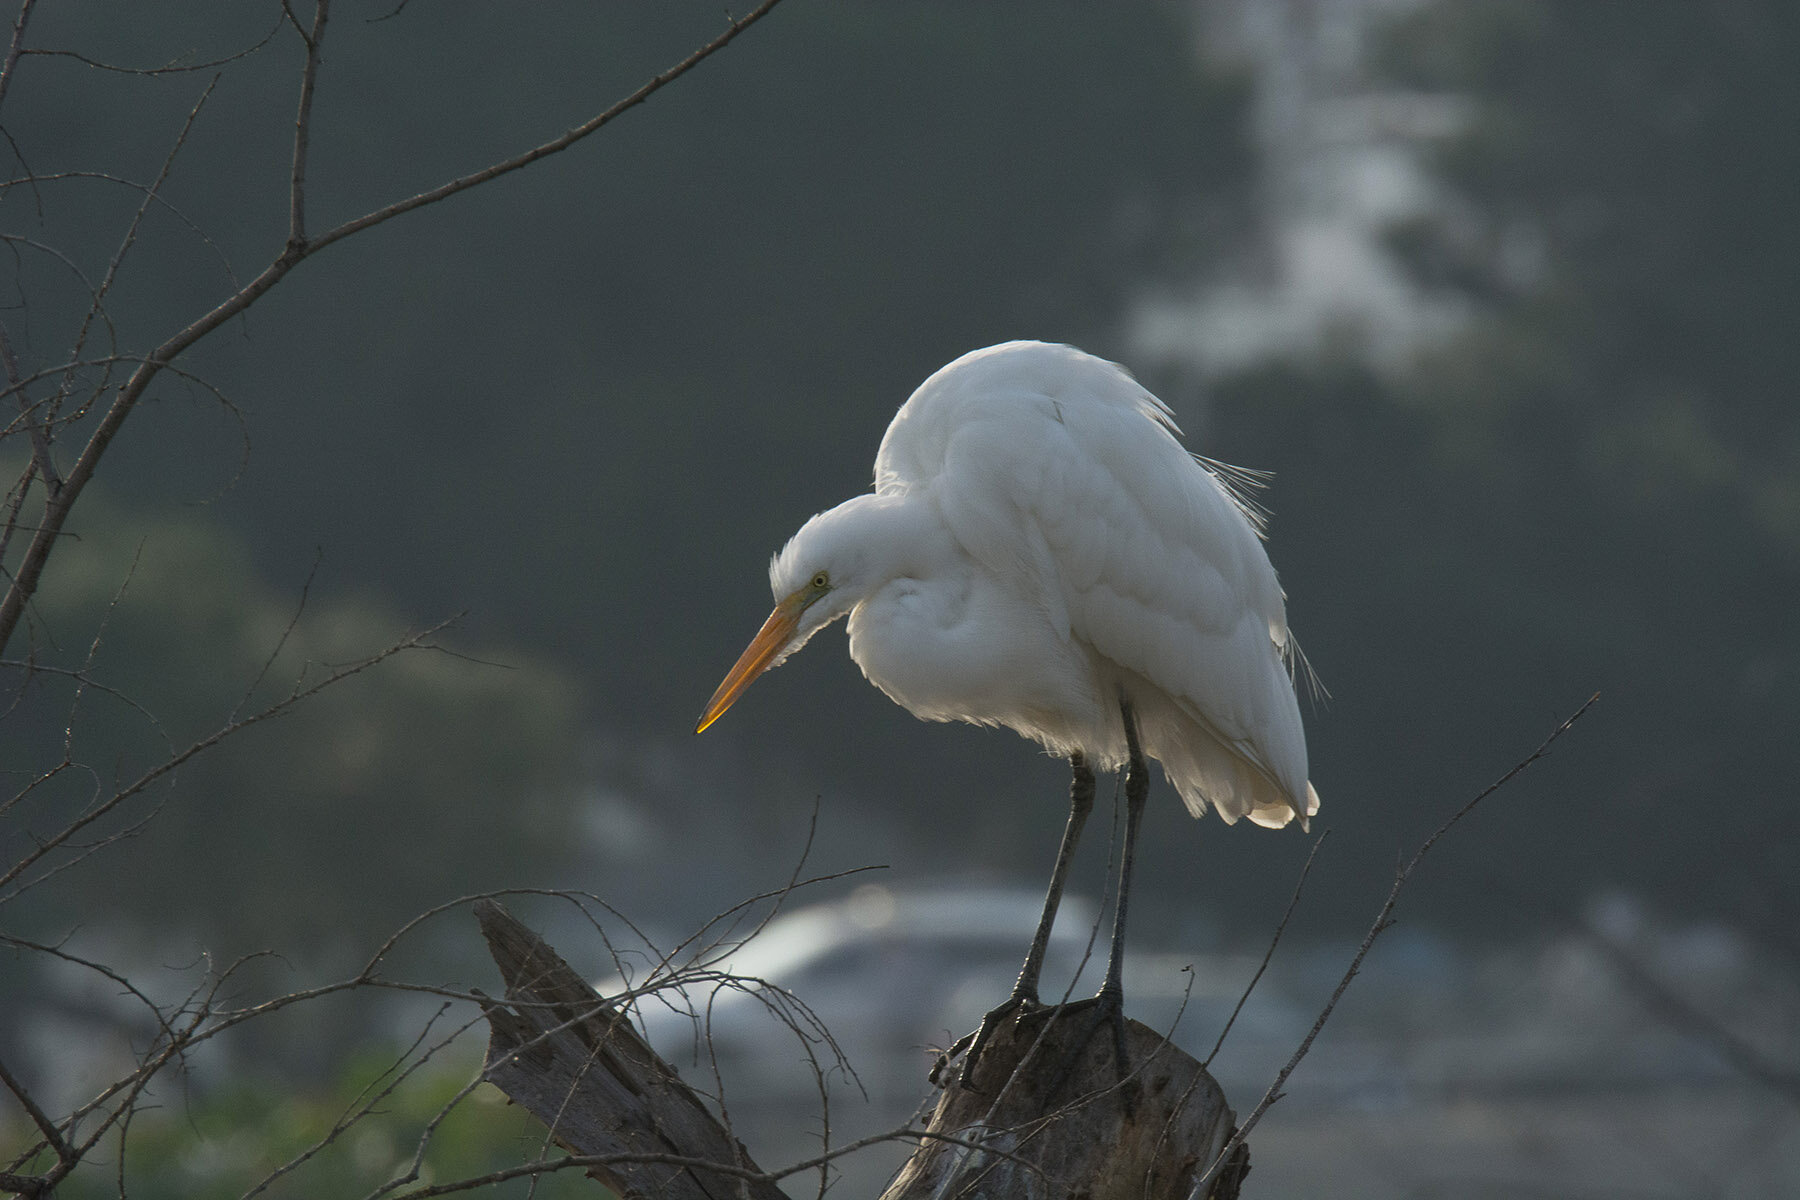 Great Egret, Whittier Narrows Nature Center, December 2019